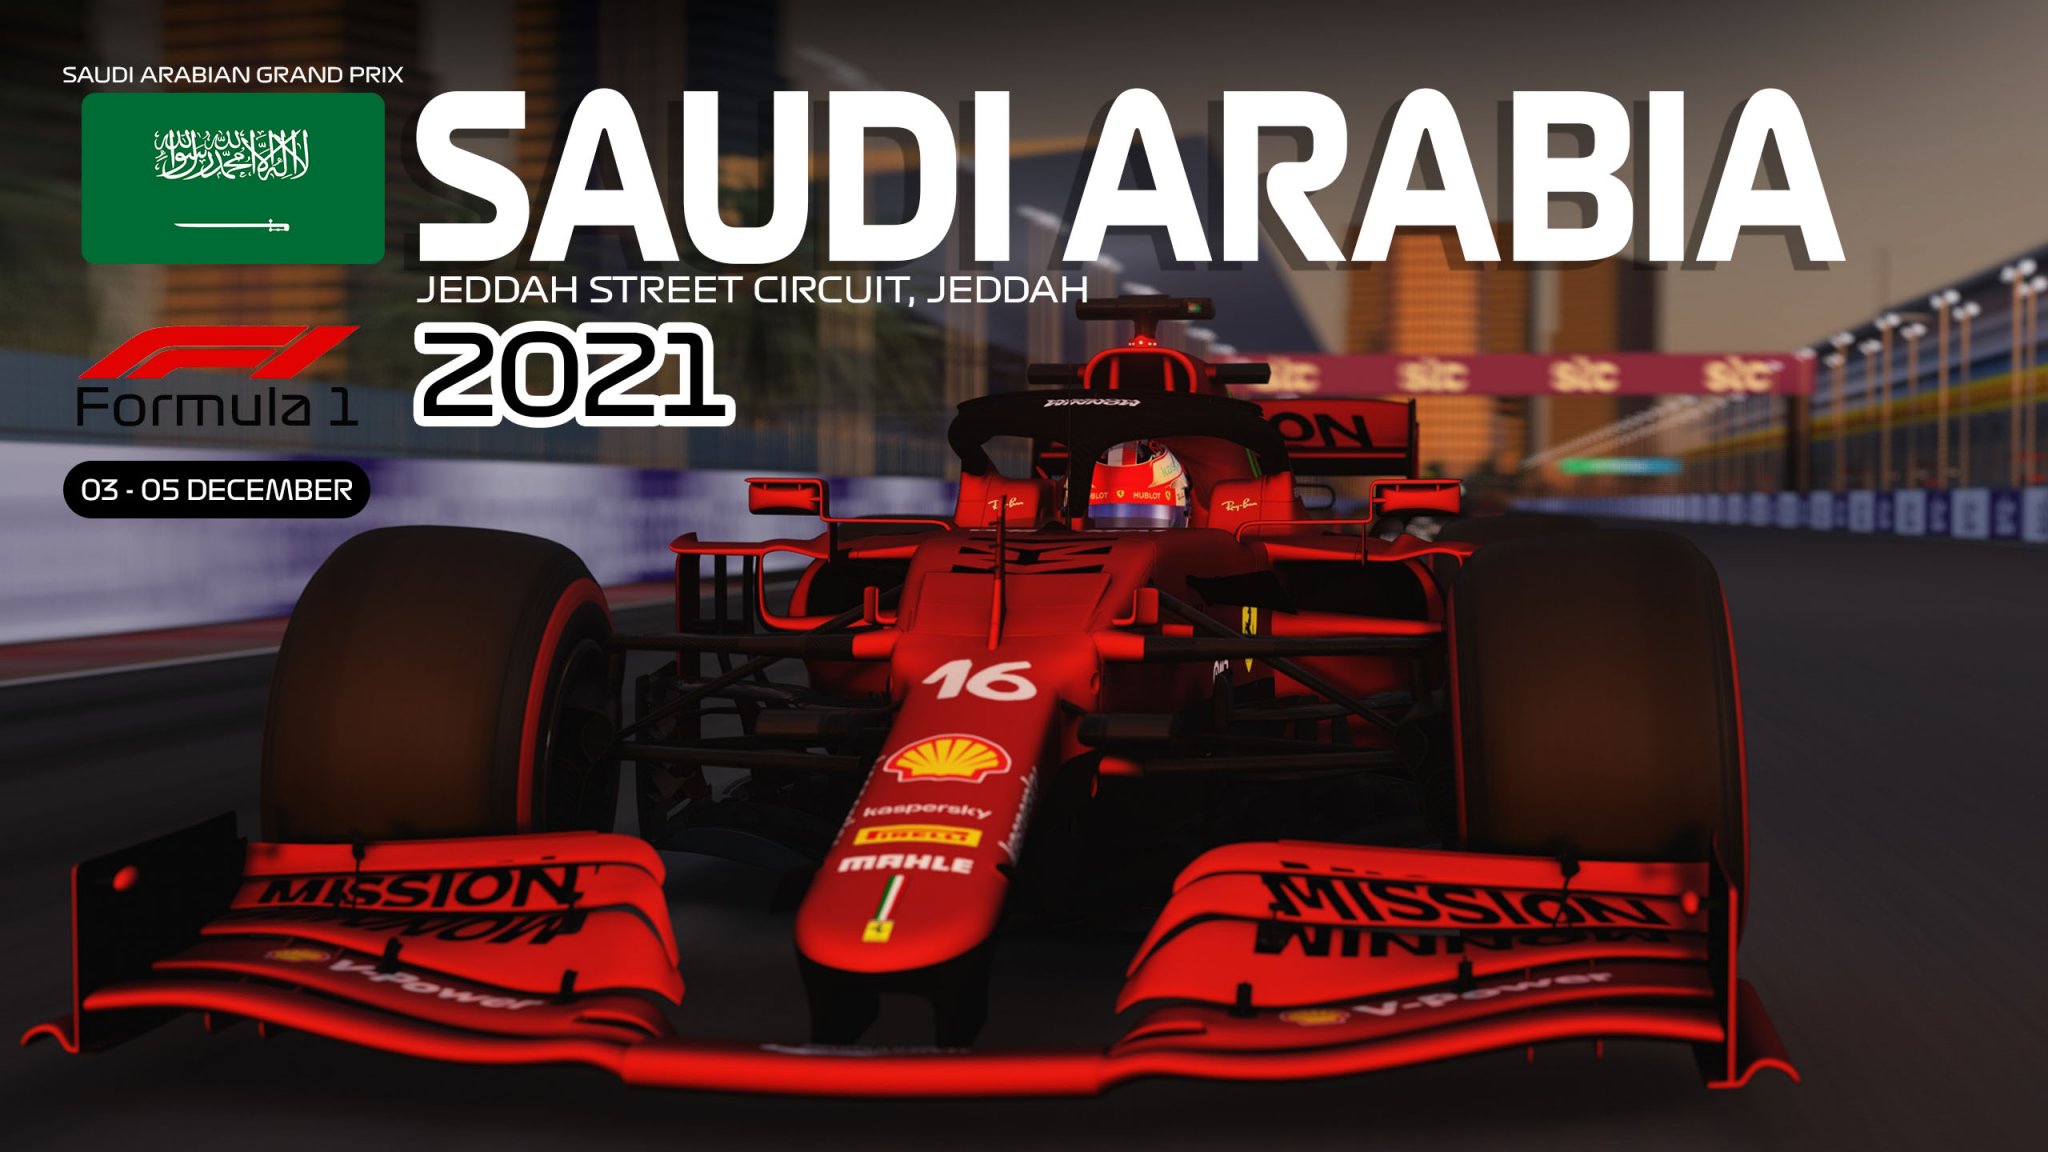 SAUDIARABIA_F1 2021 raceday_screen bg.jpg